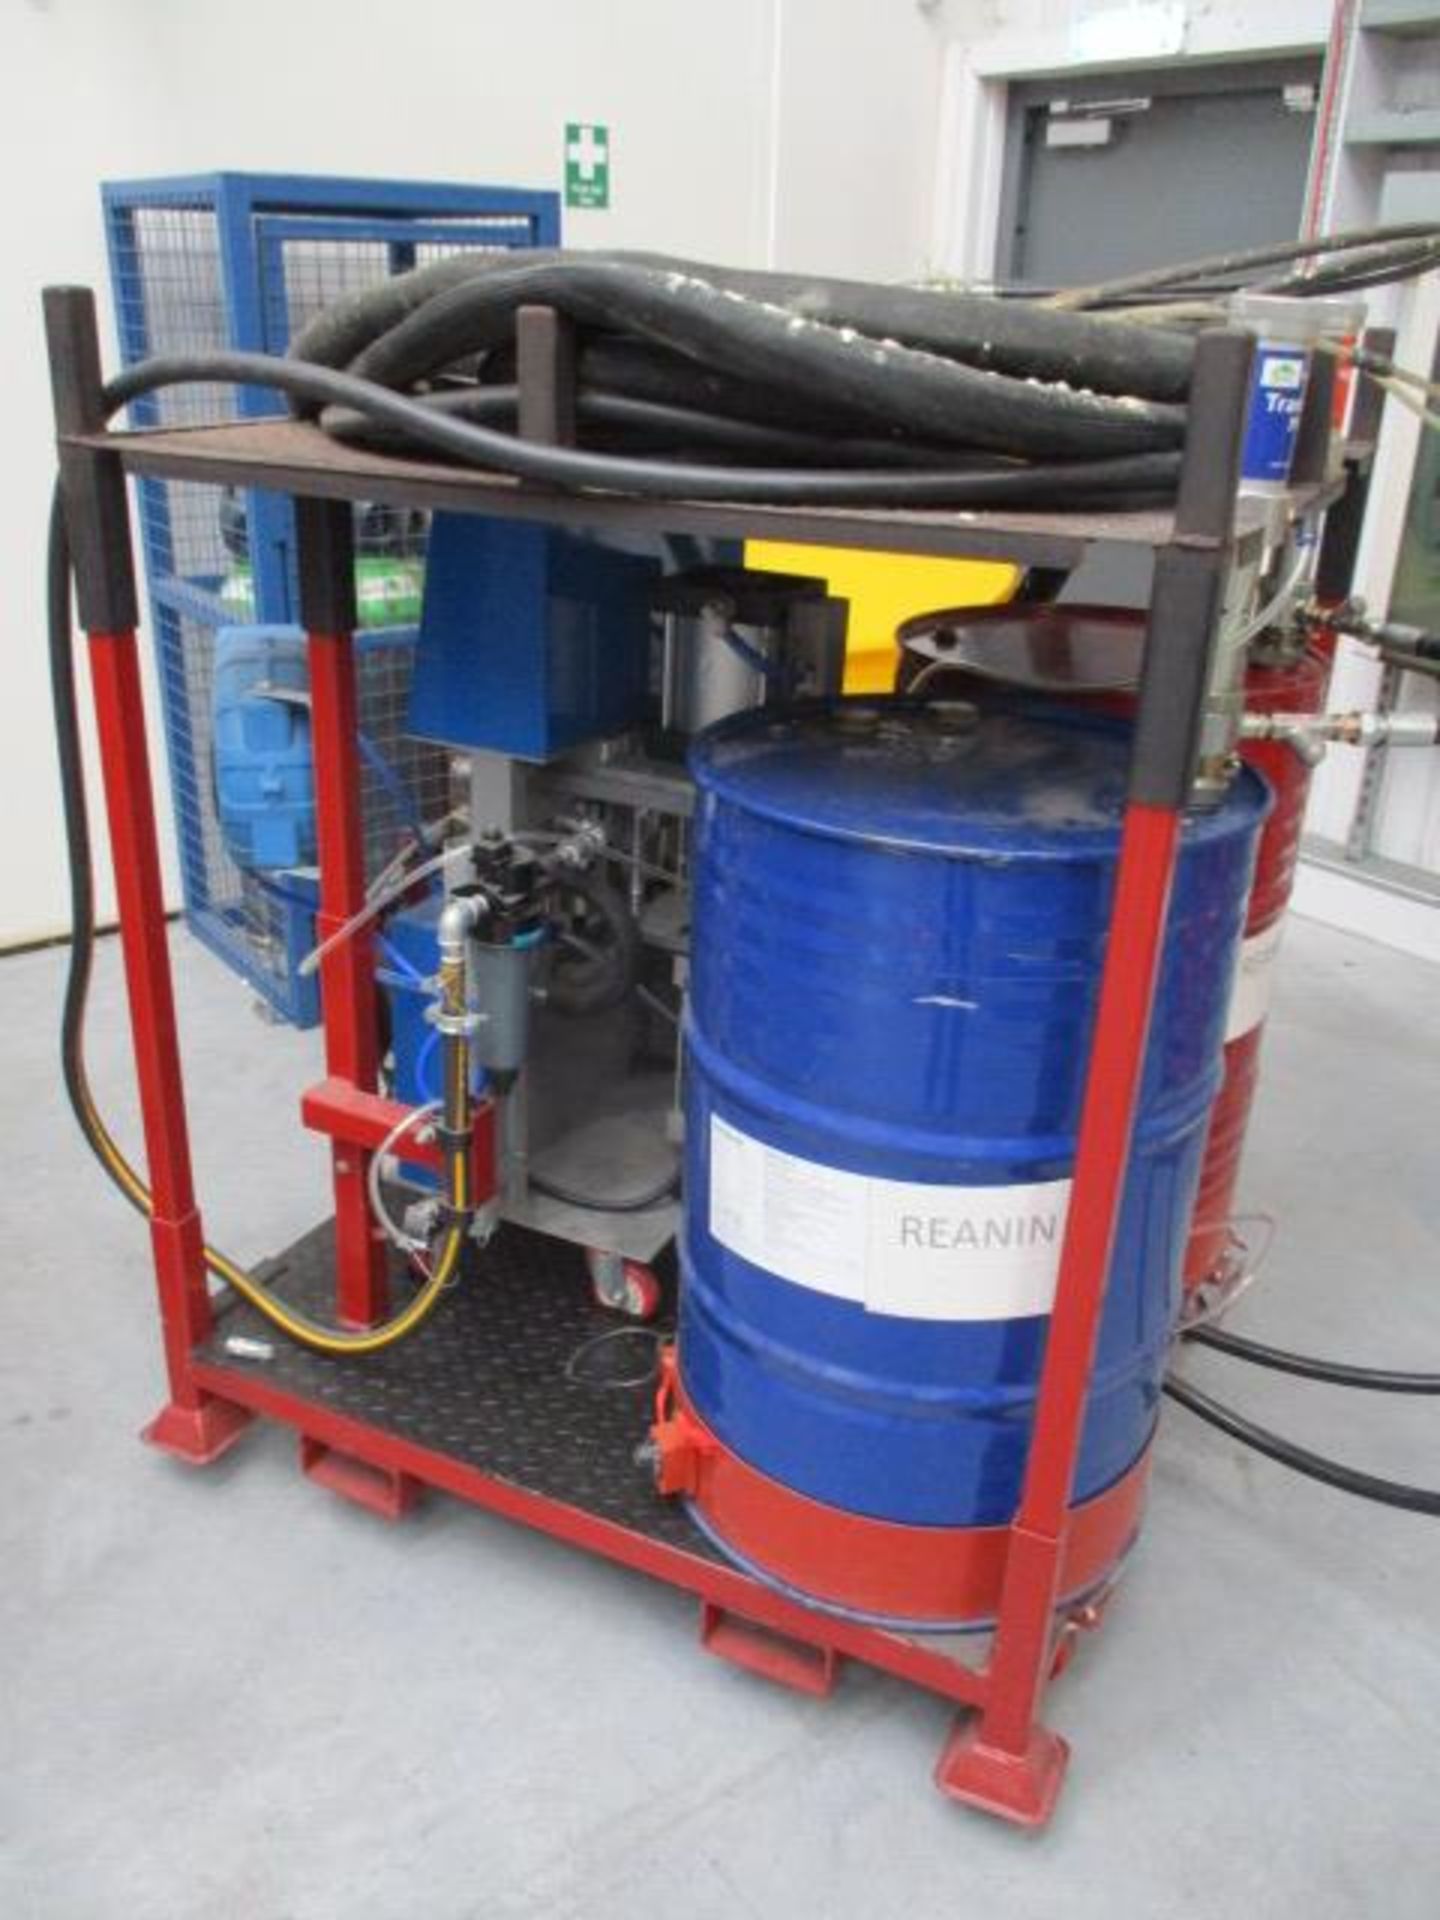 1, Reanin K2000 Pneumatic Polyurethane Spray Foaming Machine Serial No. 20222012(2022) on Mobile St - Image 2 of 3